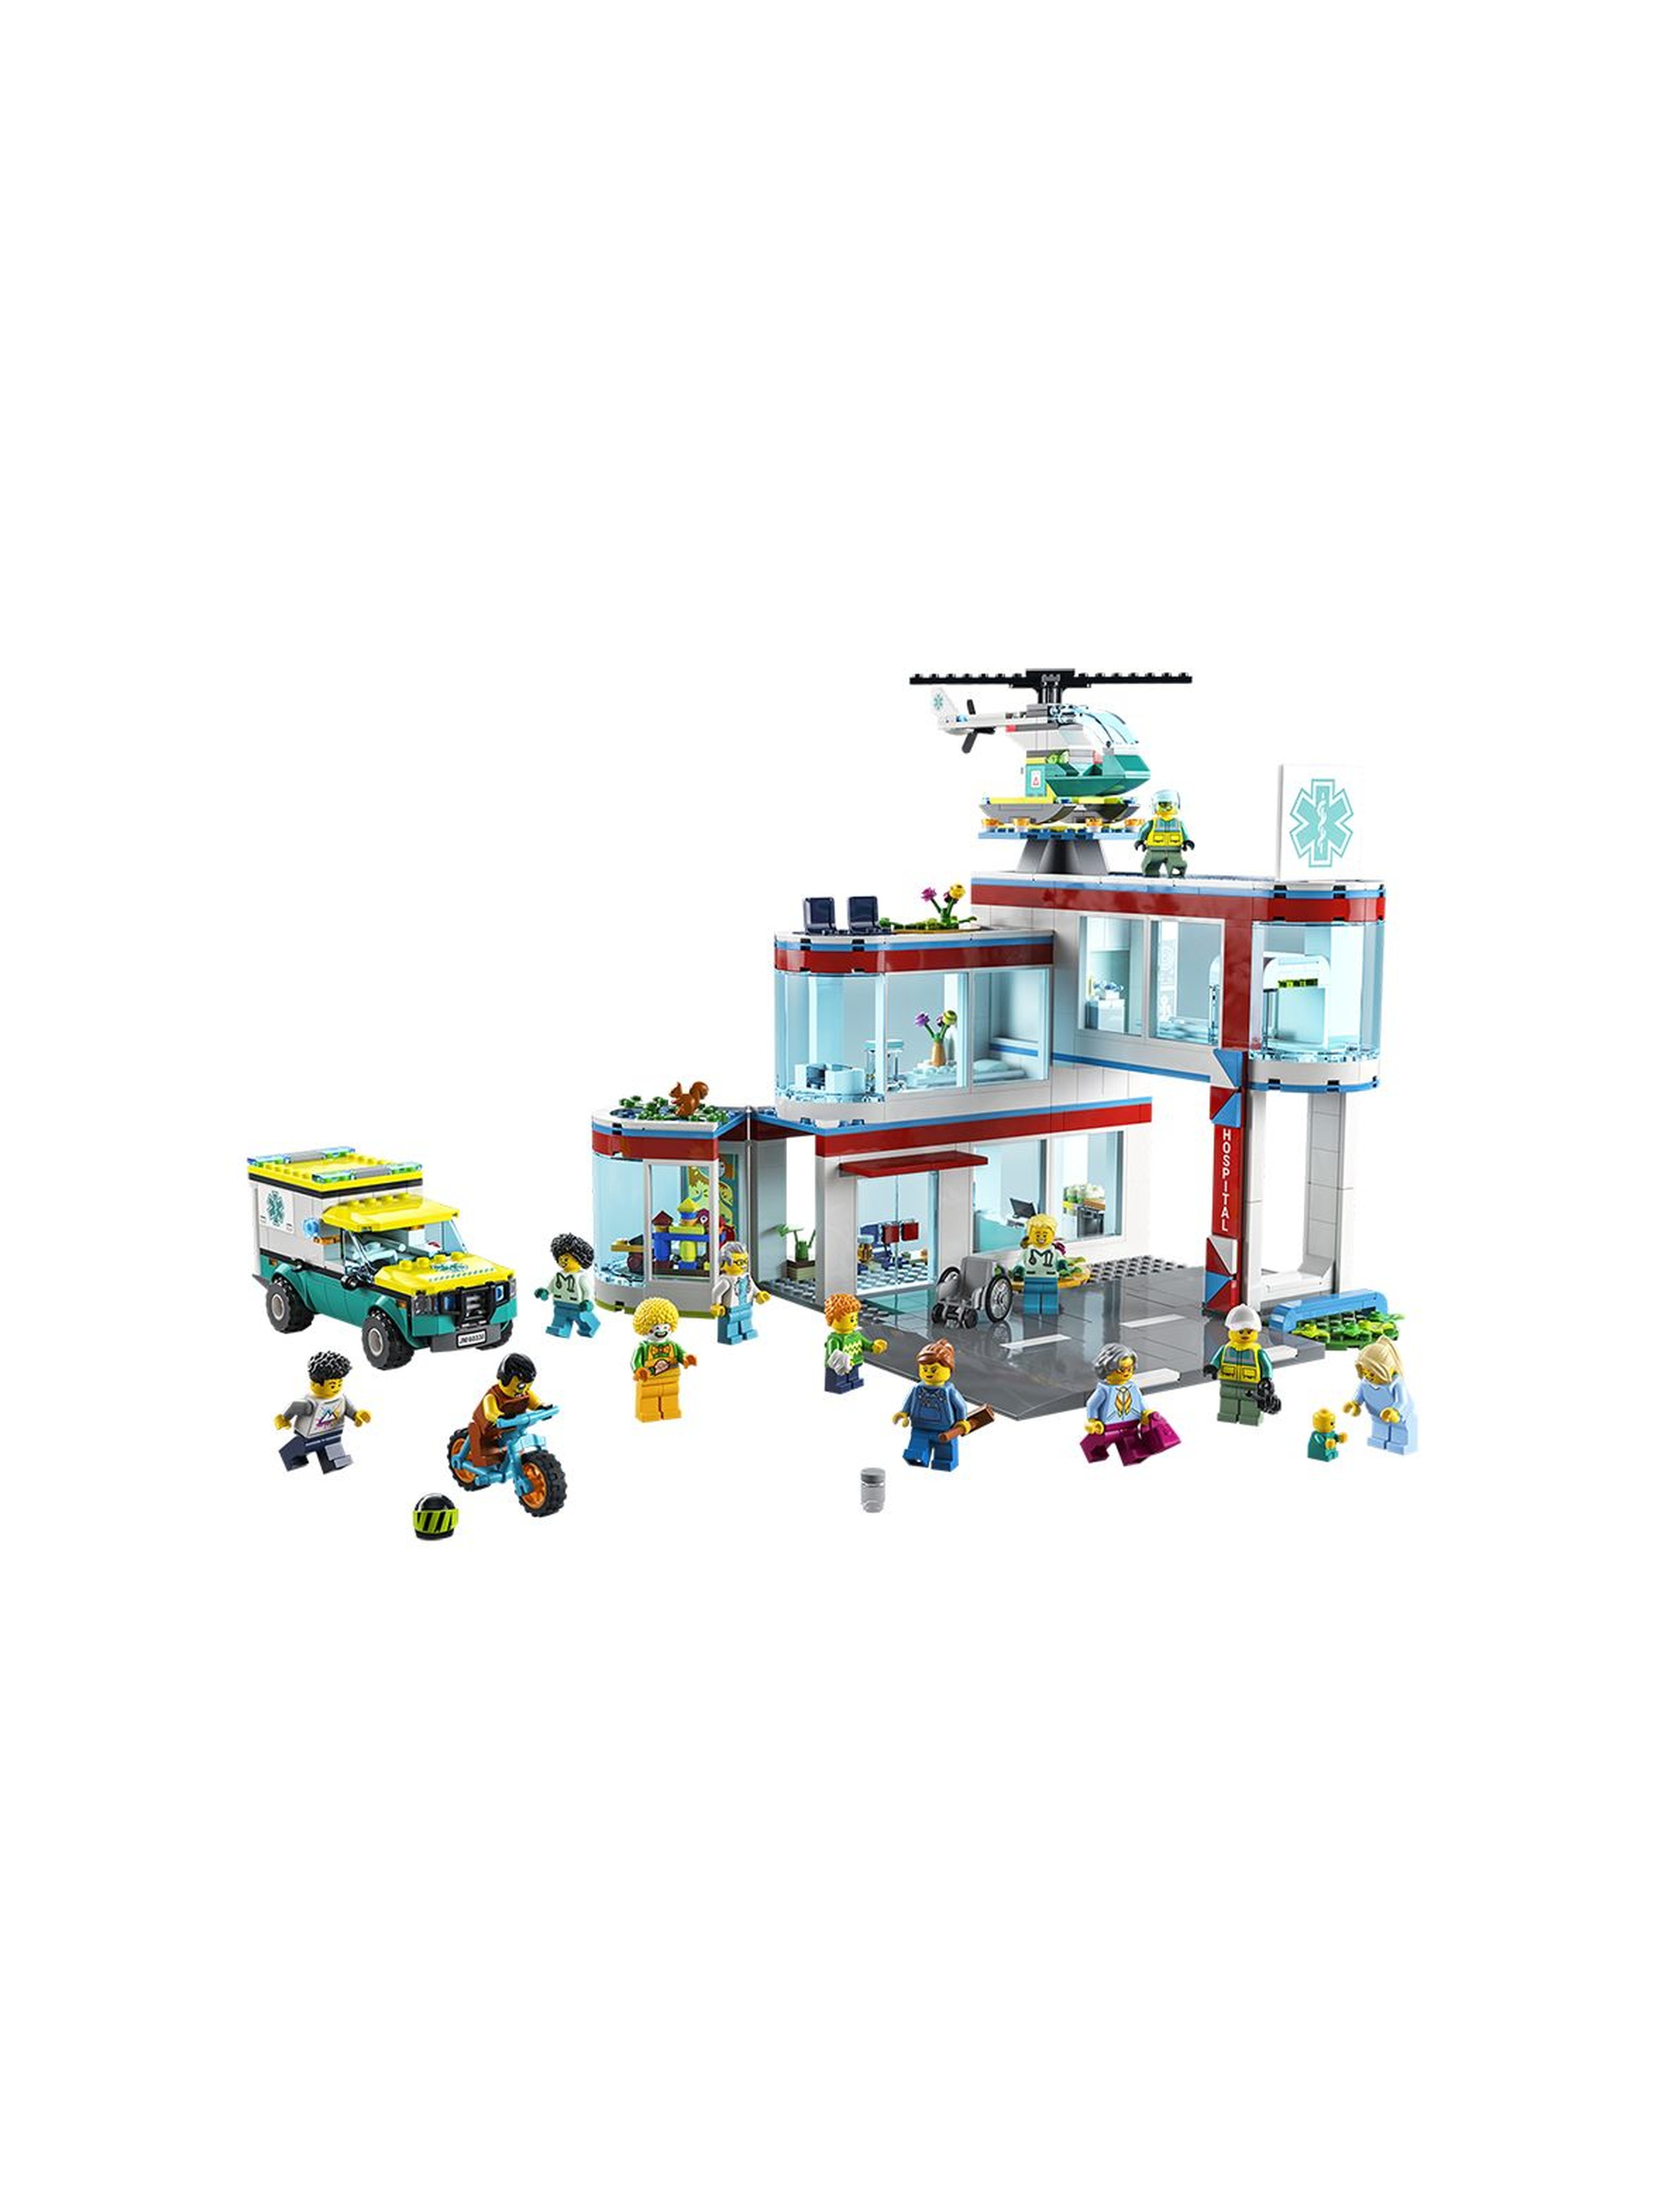 LEGO City 60330 Szpital 816 el wiek 7+